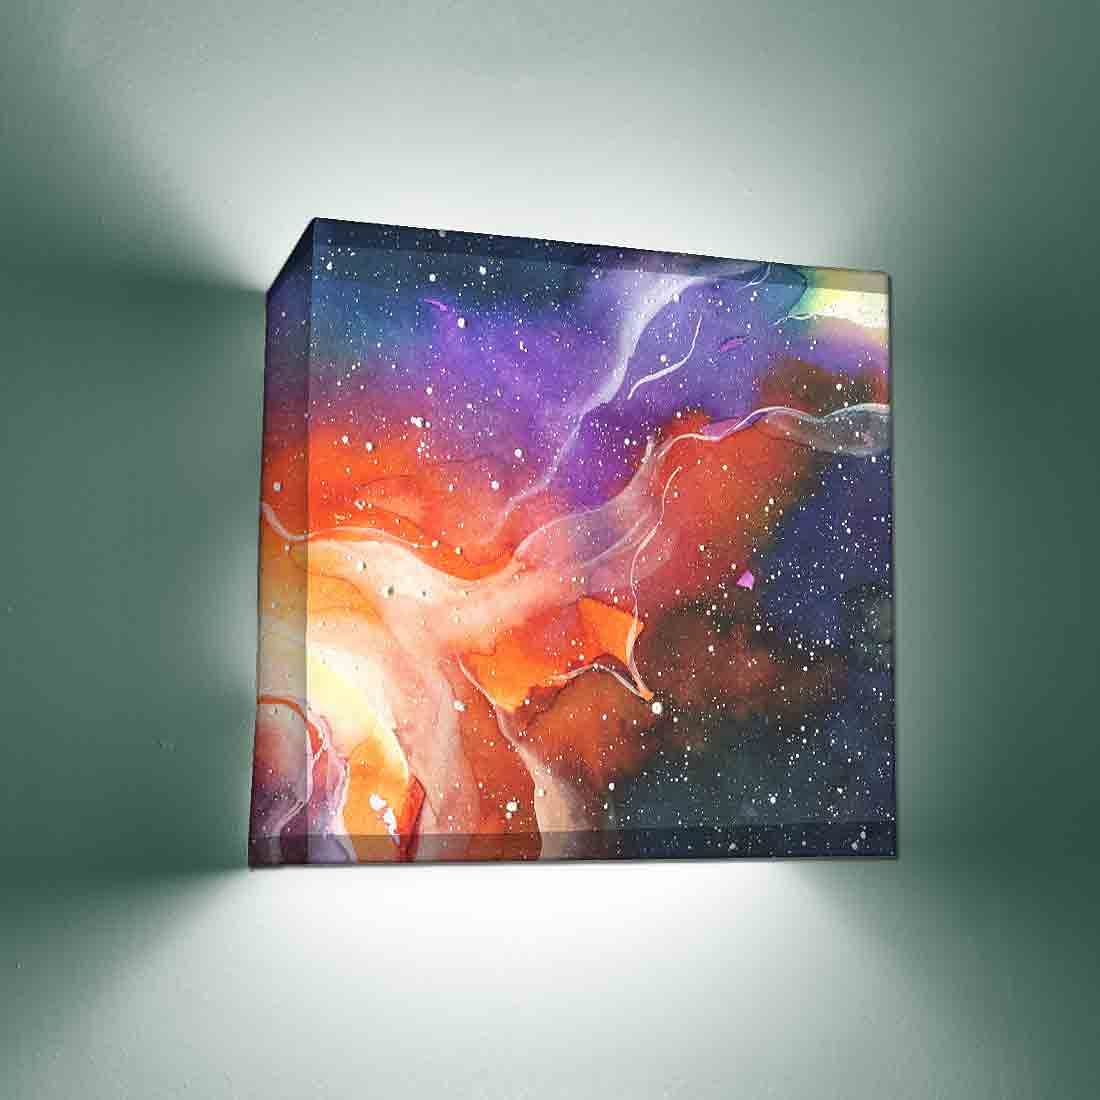 Stylish Square Wall Lamp Night Light - Galaxy Nutcase